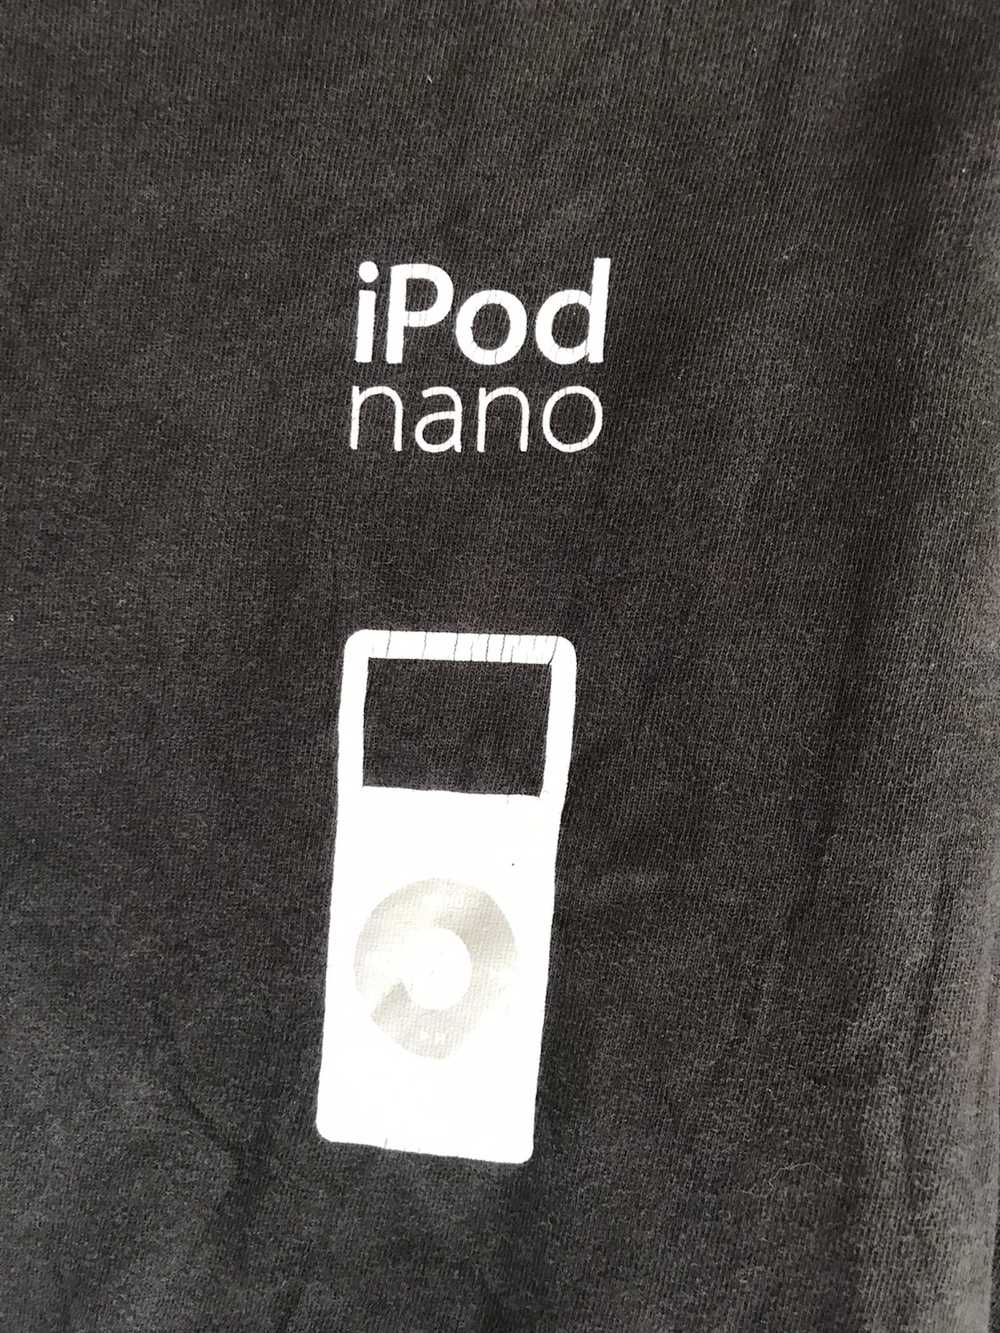 Apple × Vintage Vintage ipod nano apple t shirt - image 2